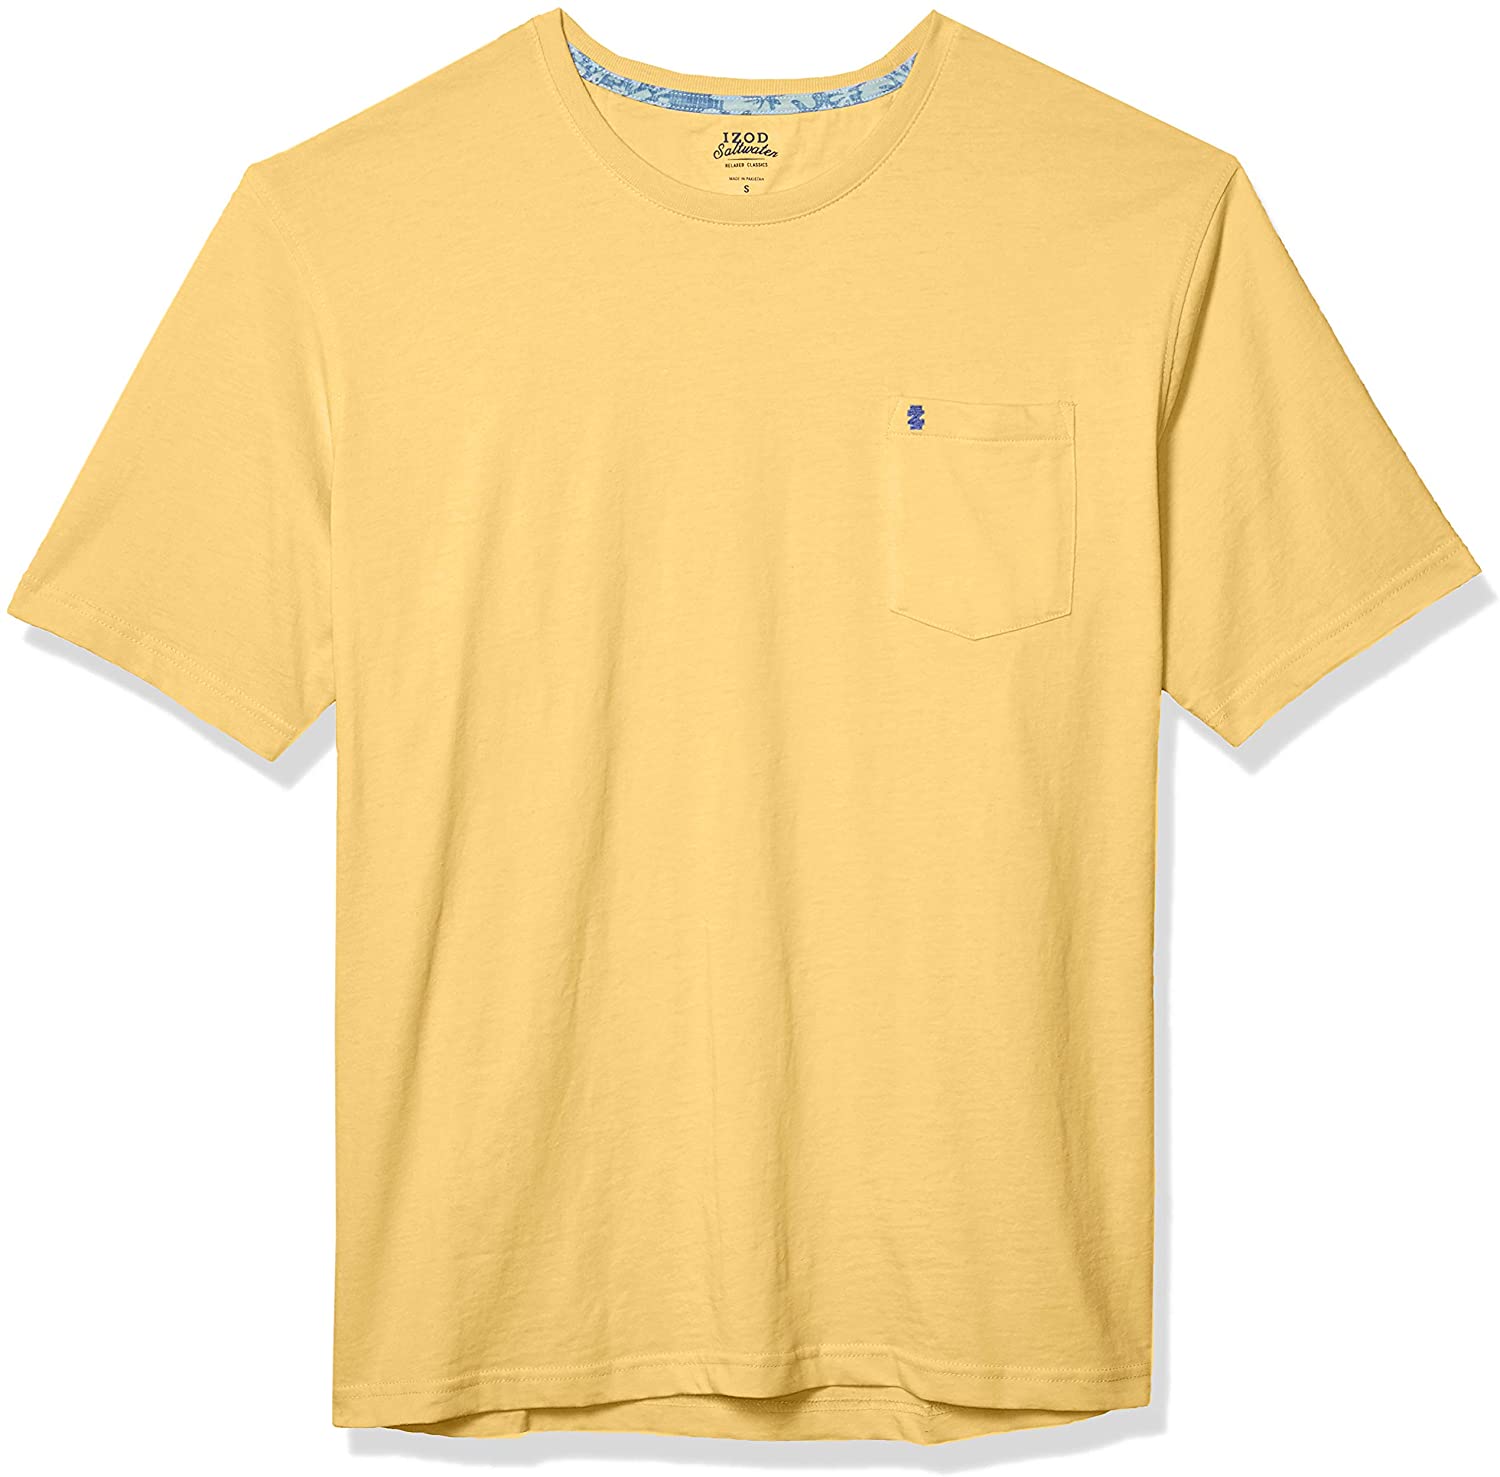 IZOD Men's Saltwater Short Sleeve Solid T-Shirt with Pocket | eBay